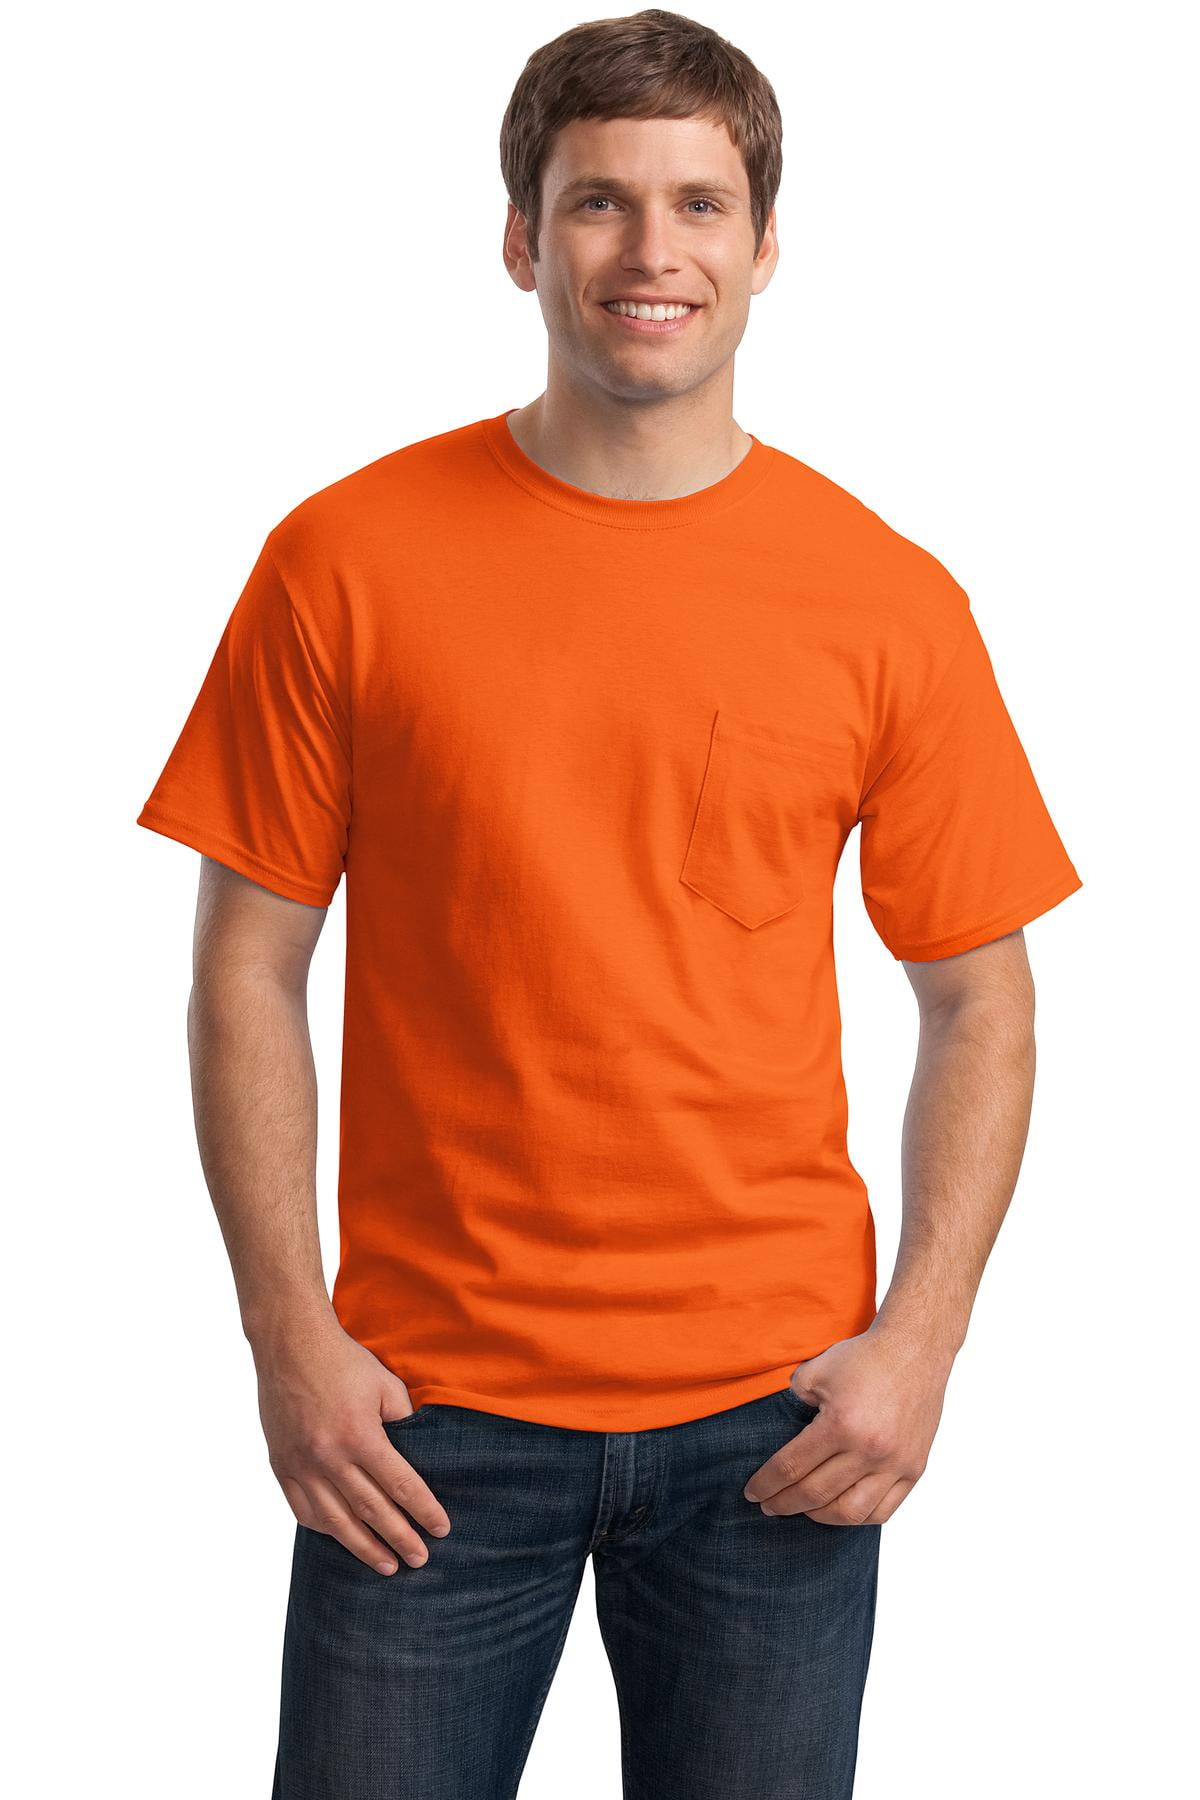 Hanes Men's Short Sleeve Tagless 100% Cotton T-Shirt with Pocket 5590 